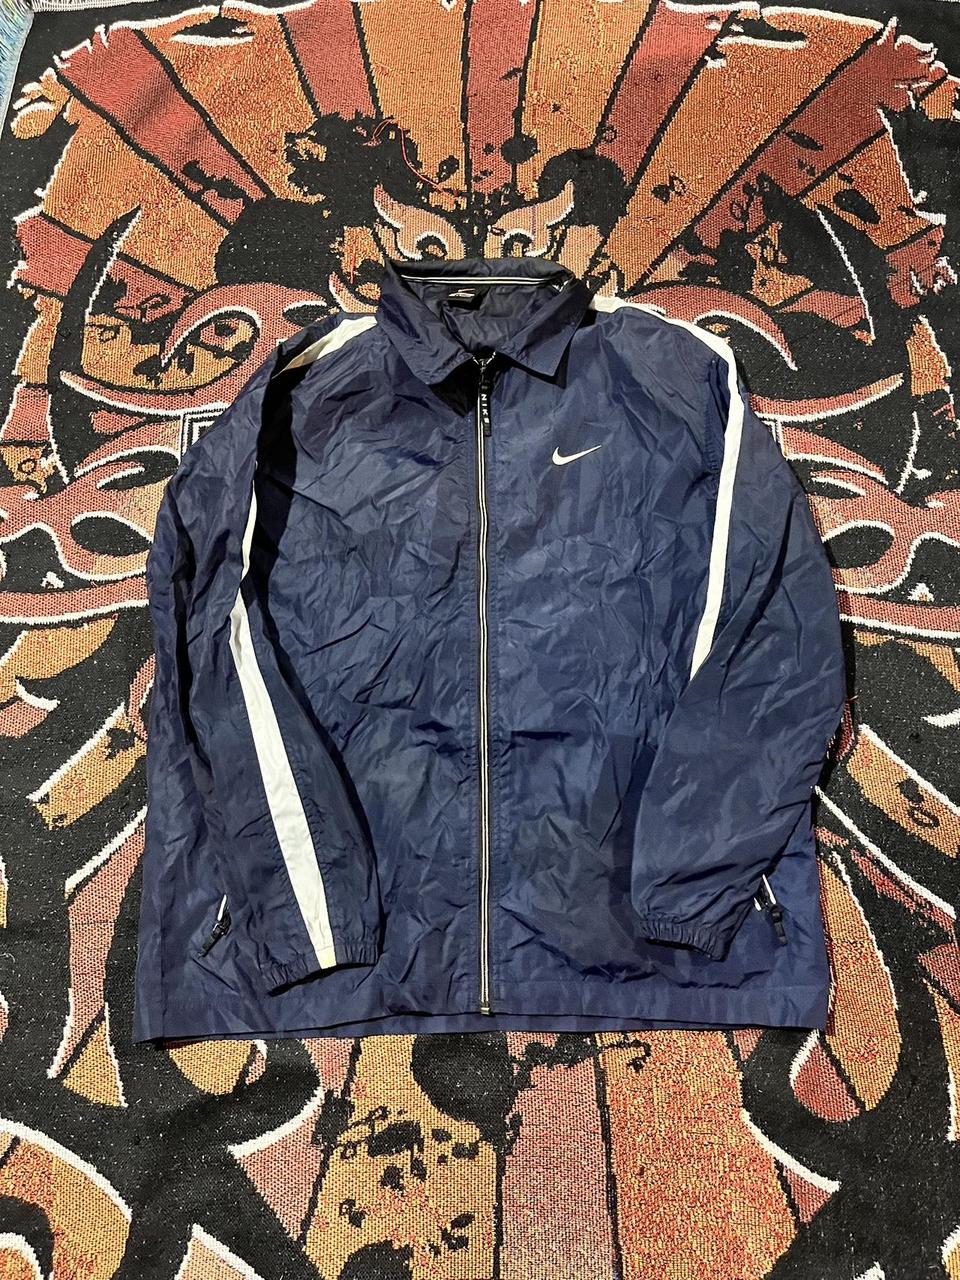 Vintage Nike Windbreaker Jacket, size Medium, in... - Depop